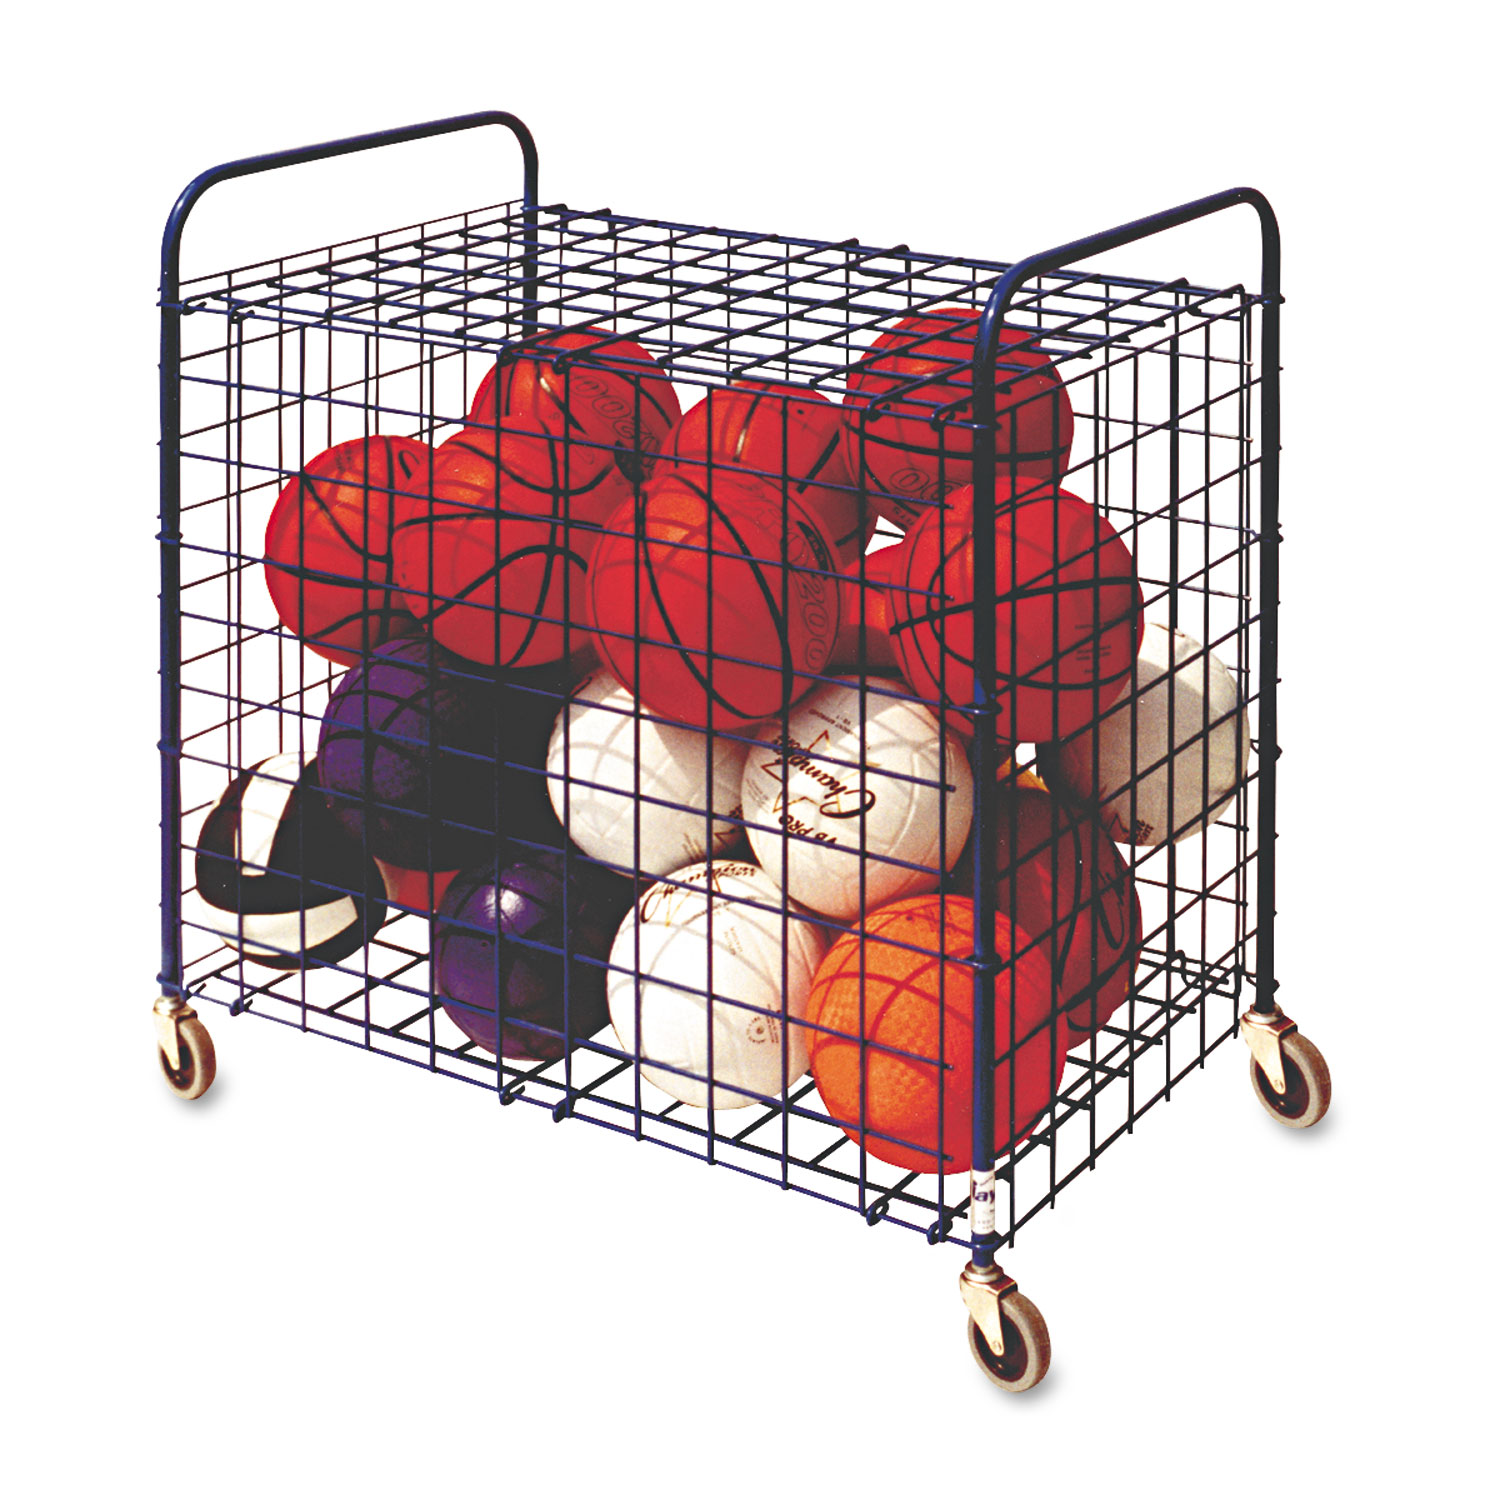  Champion Sports LFX Lockable Ball Storage Cart, 24-Ball Capacity, 37w x 22d x 20h, Black (CSILFX) 